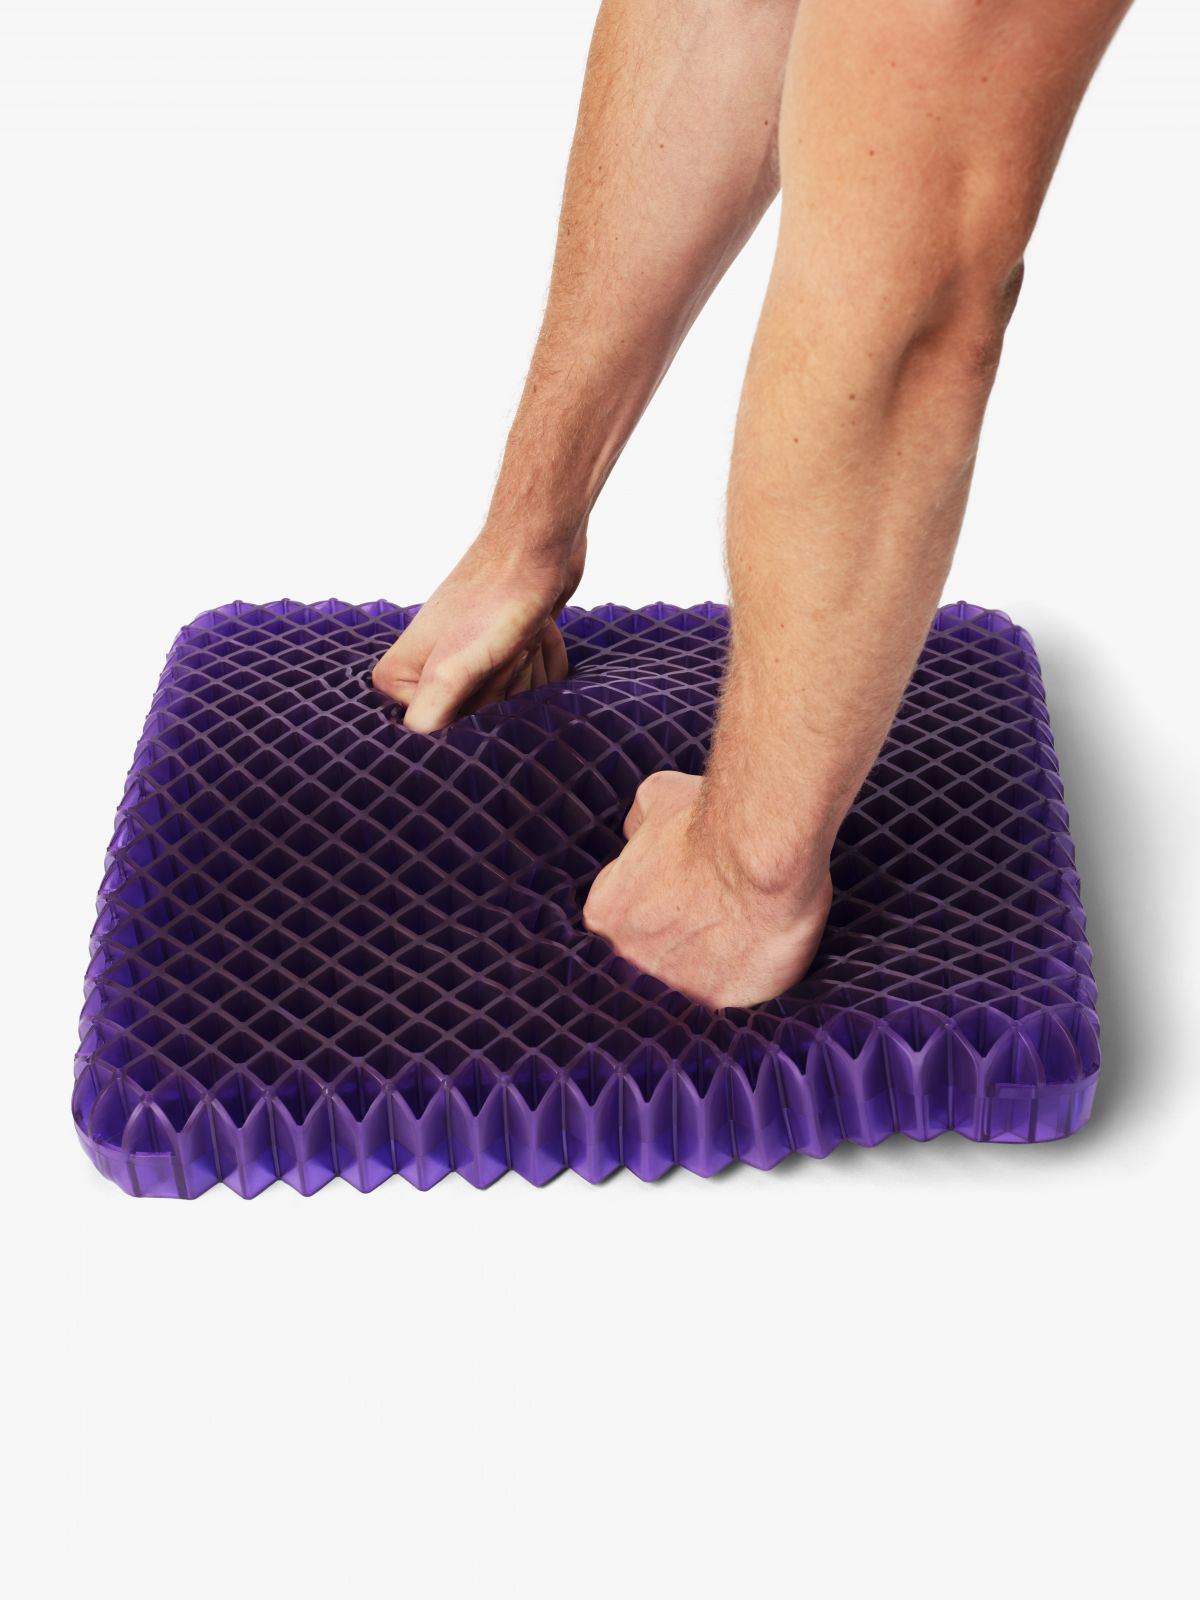 The Royal Purple No-Pressure Seat Cushion